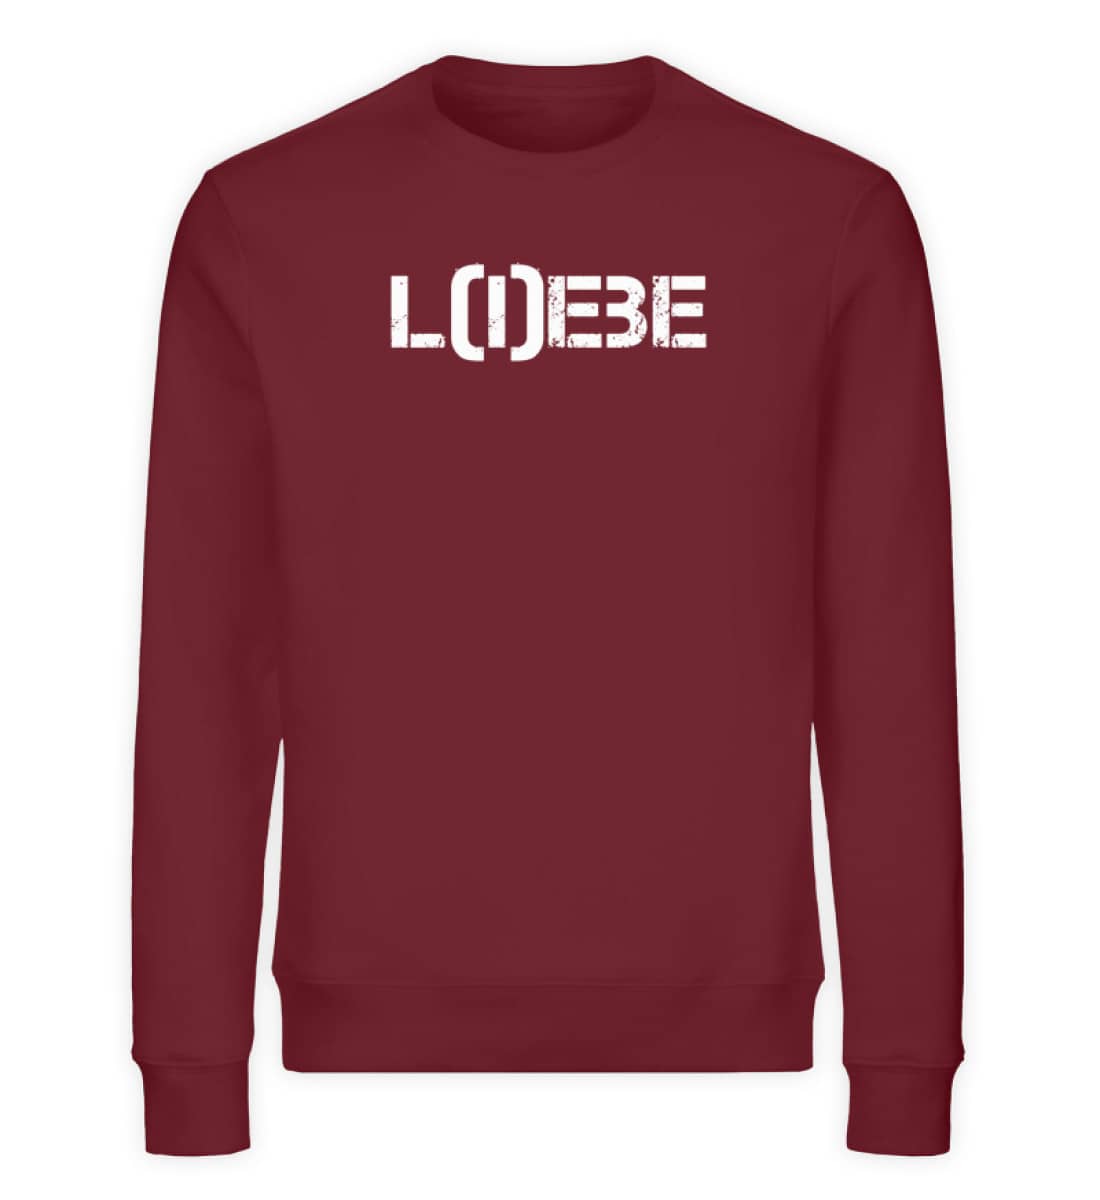 L(i)ebe - Unisex Organic Sweatshirt-6883